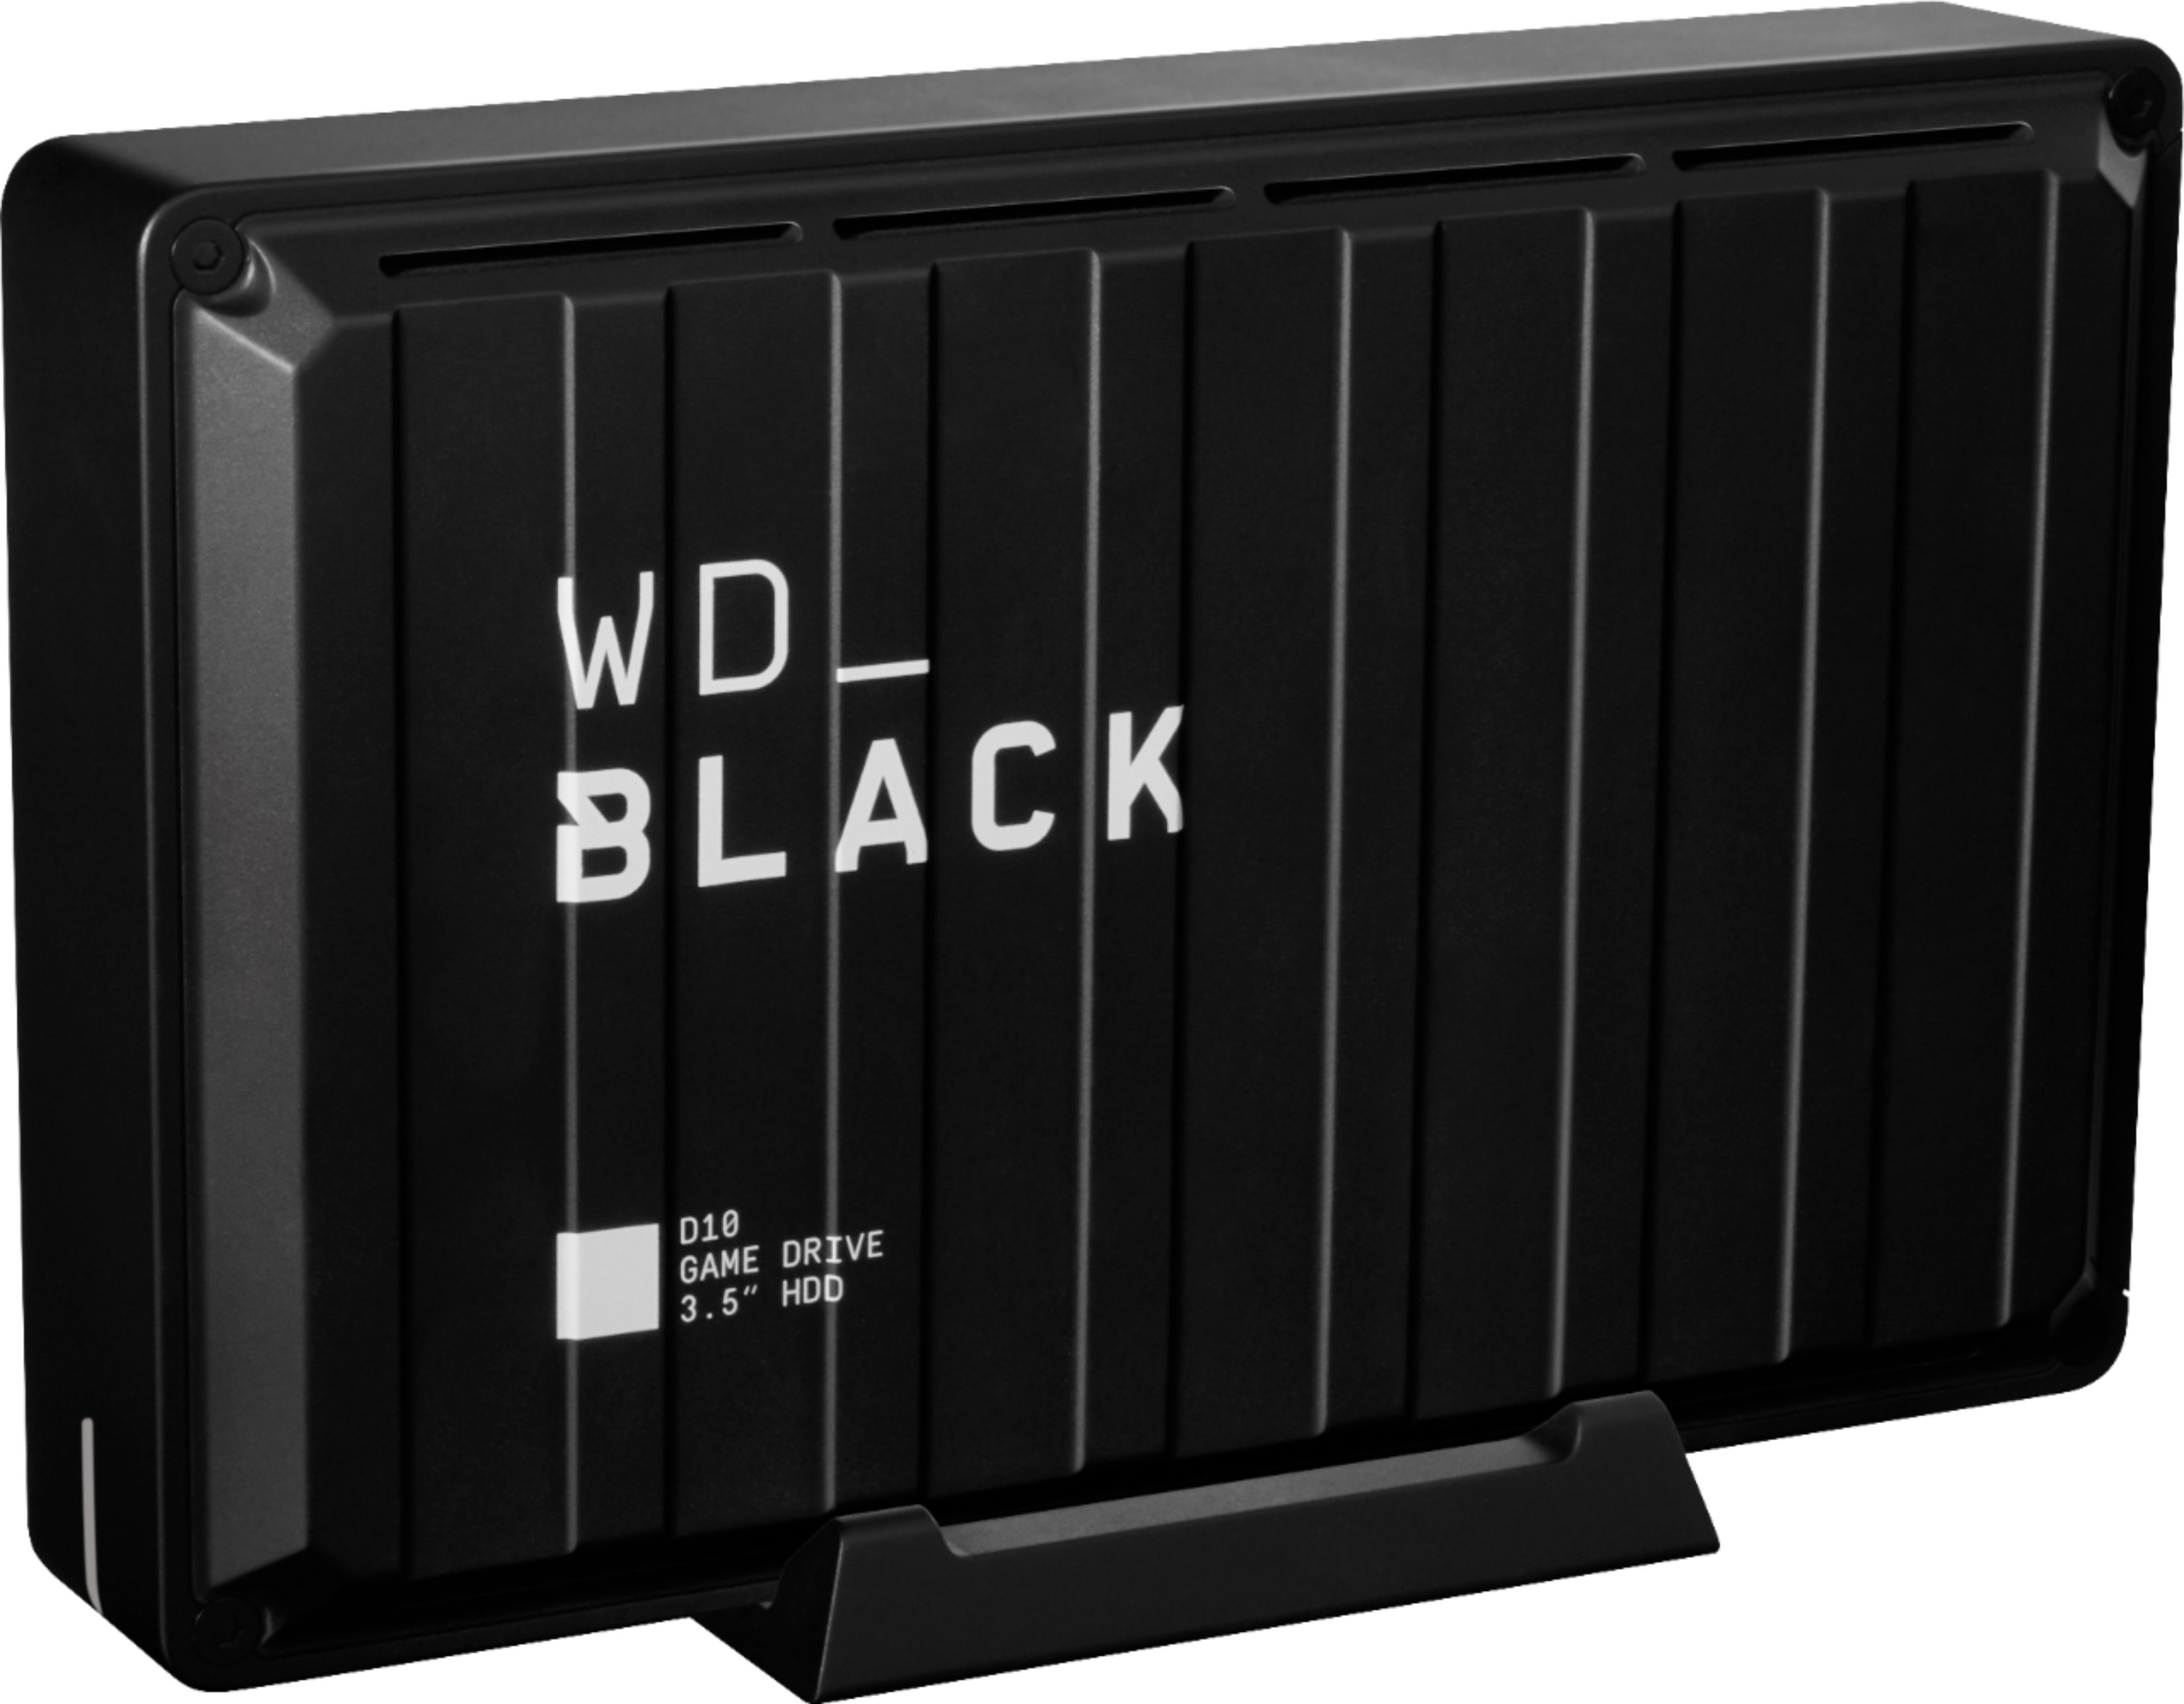 Angle View: WD - Black 500GB Internal SATA Hard Drive (OEM/Bare Drive) for Desktops